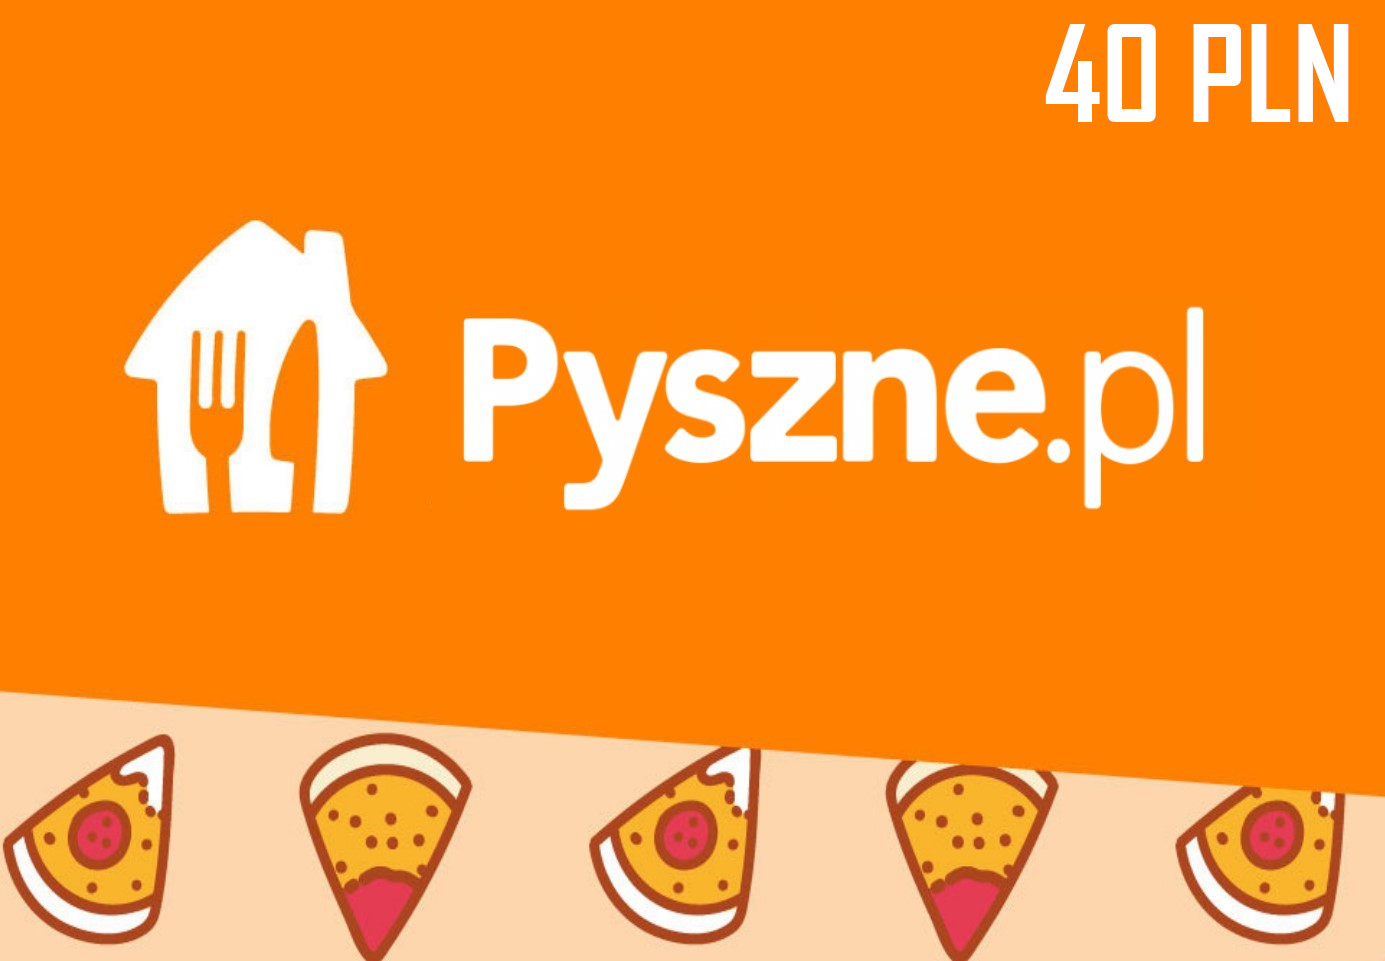 Pyszne.pl 40 PLN Gift Card PL, 11.82 usd